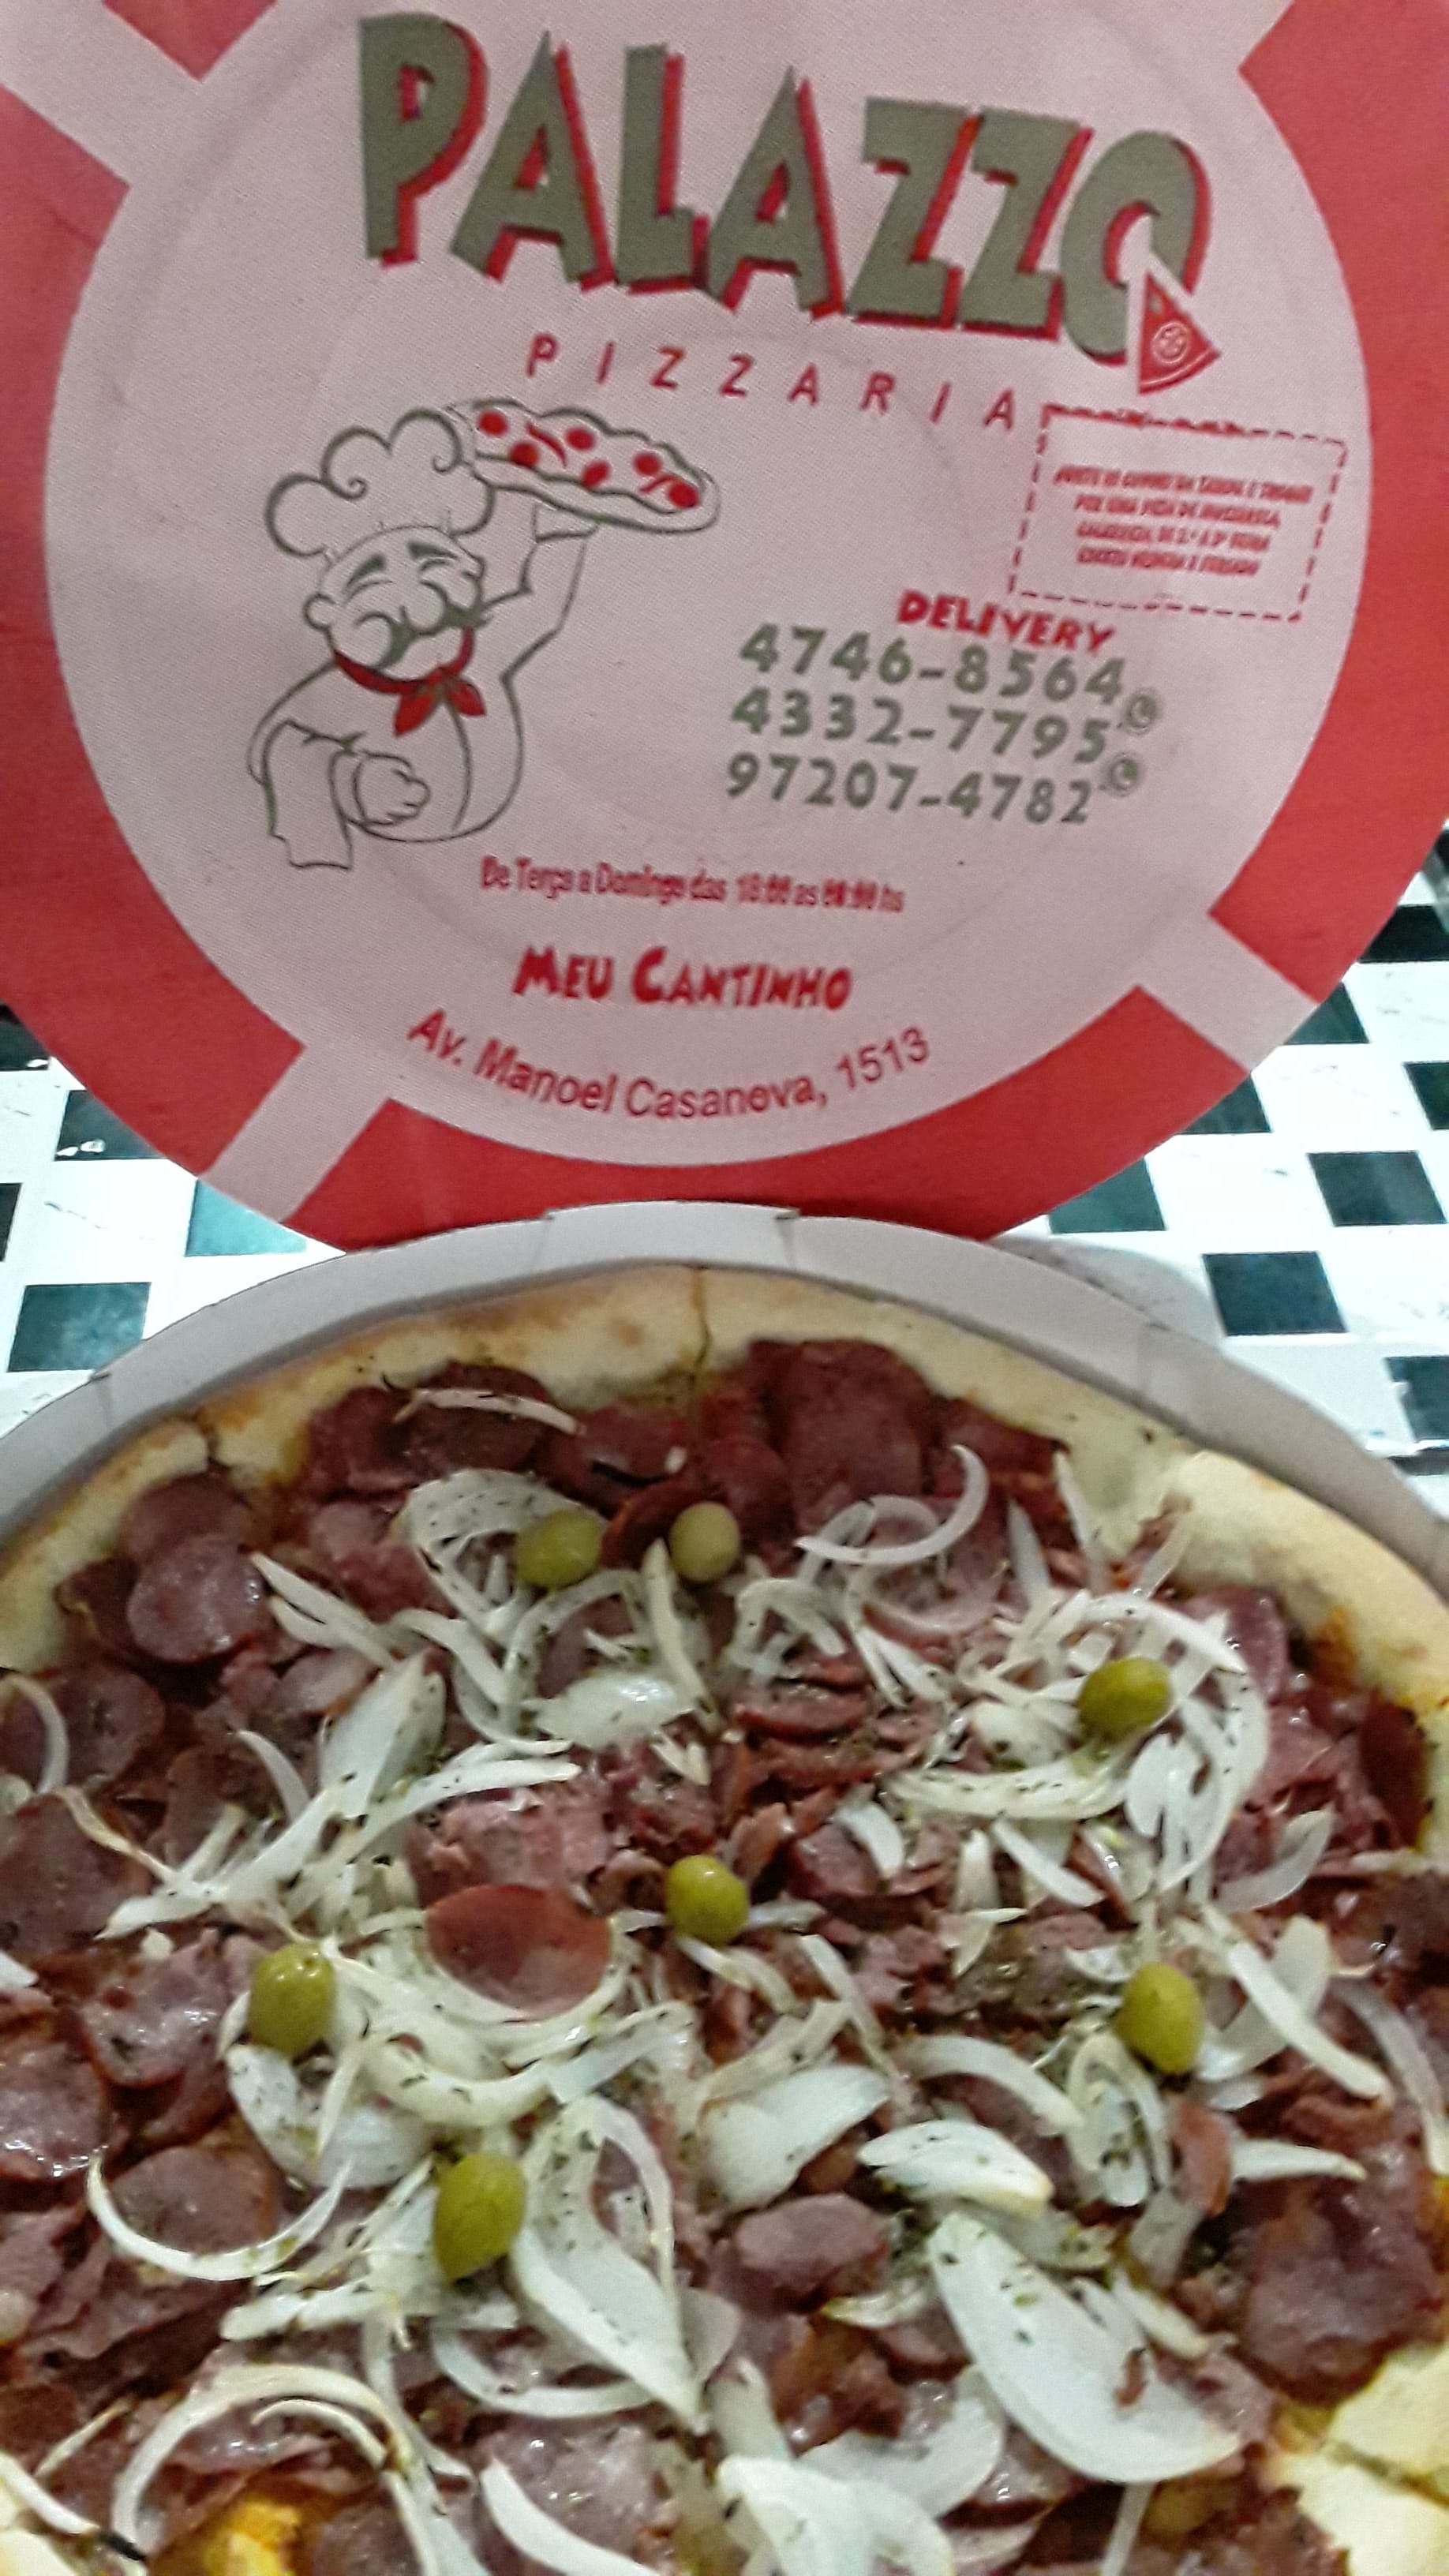 Pizzaria Do Felipe Suzano 96316-4139 - Pizzaria em Jardim Varan